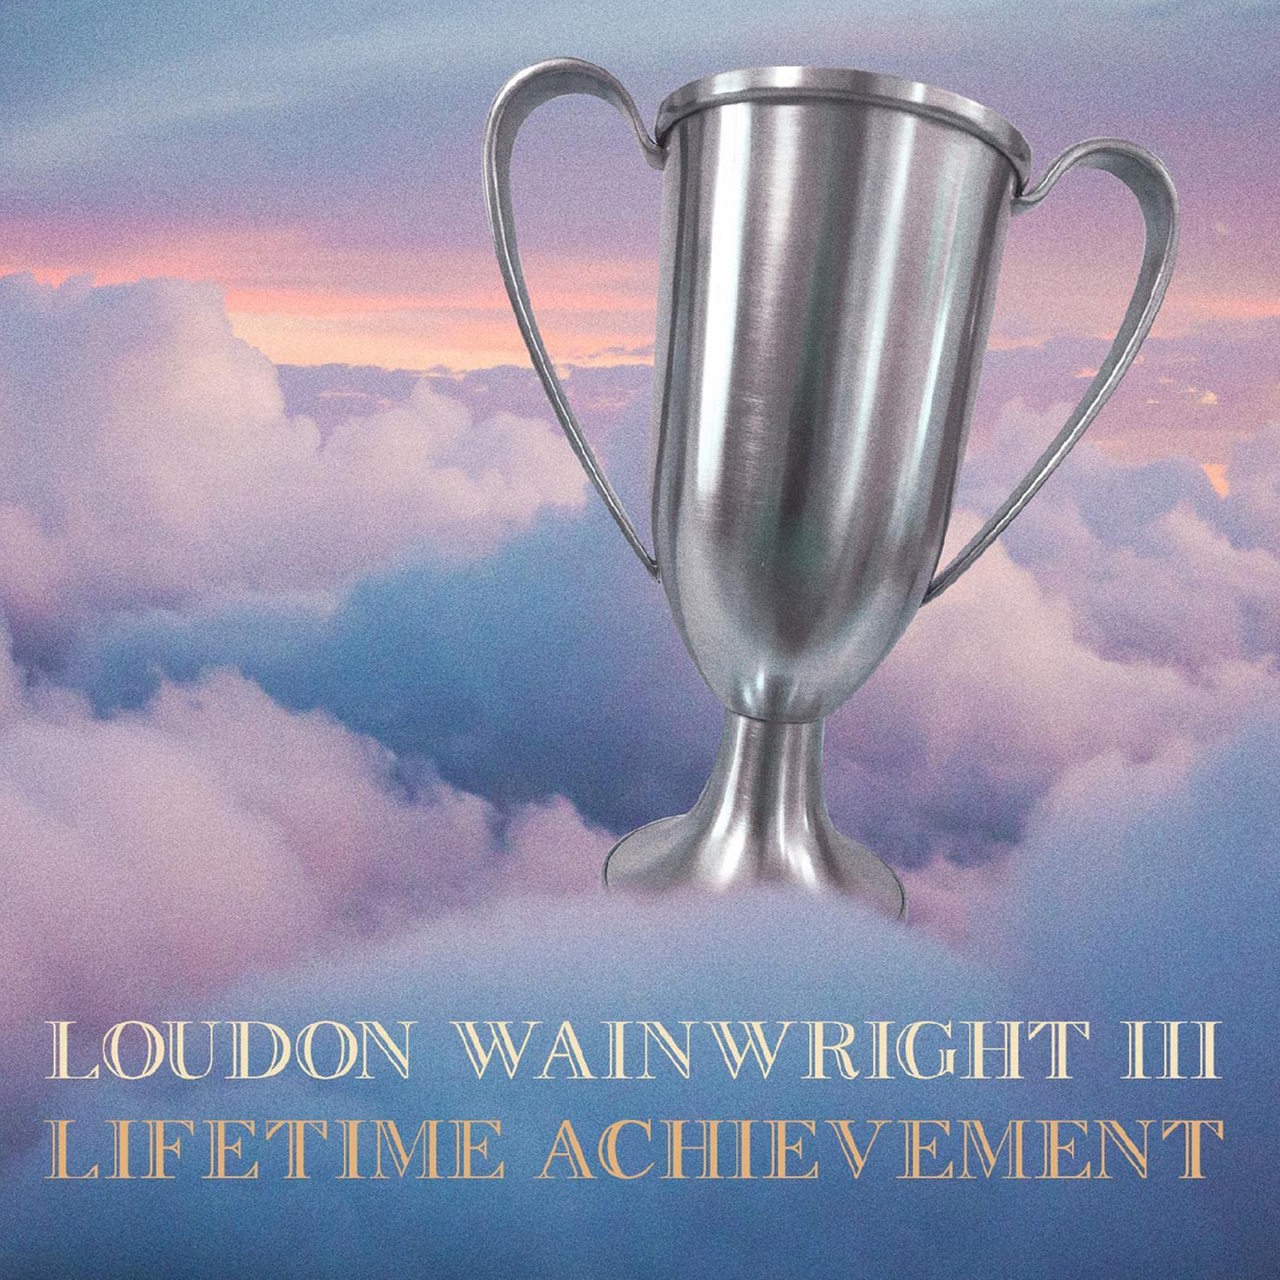 Album von Loudon Wainwright III: Lifetime achievement